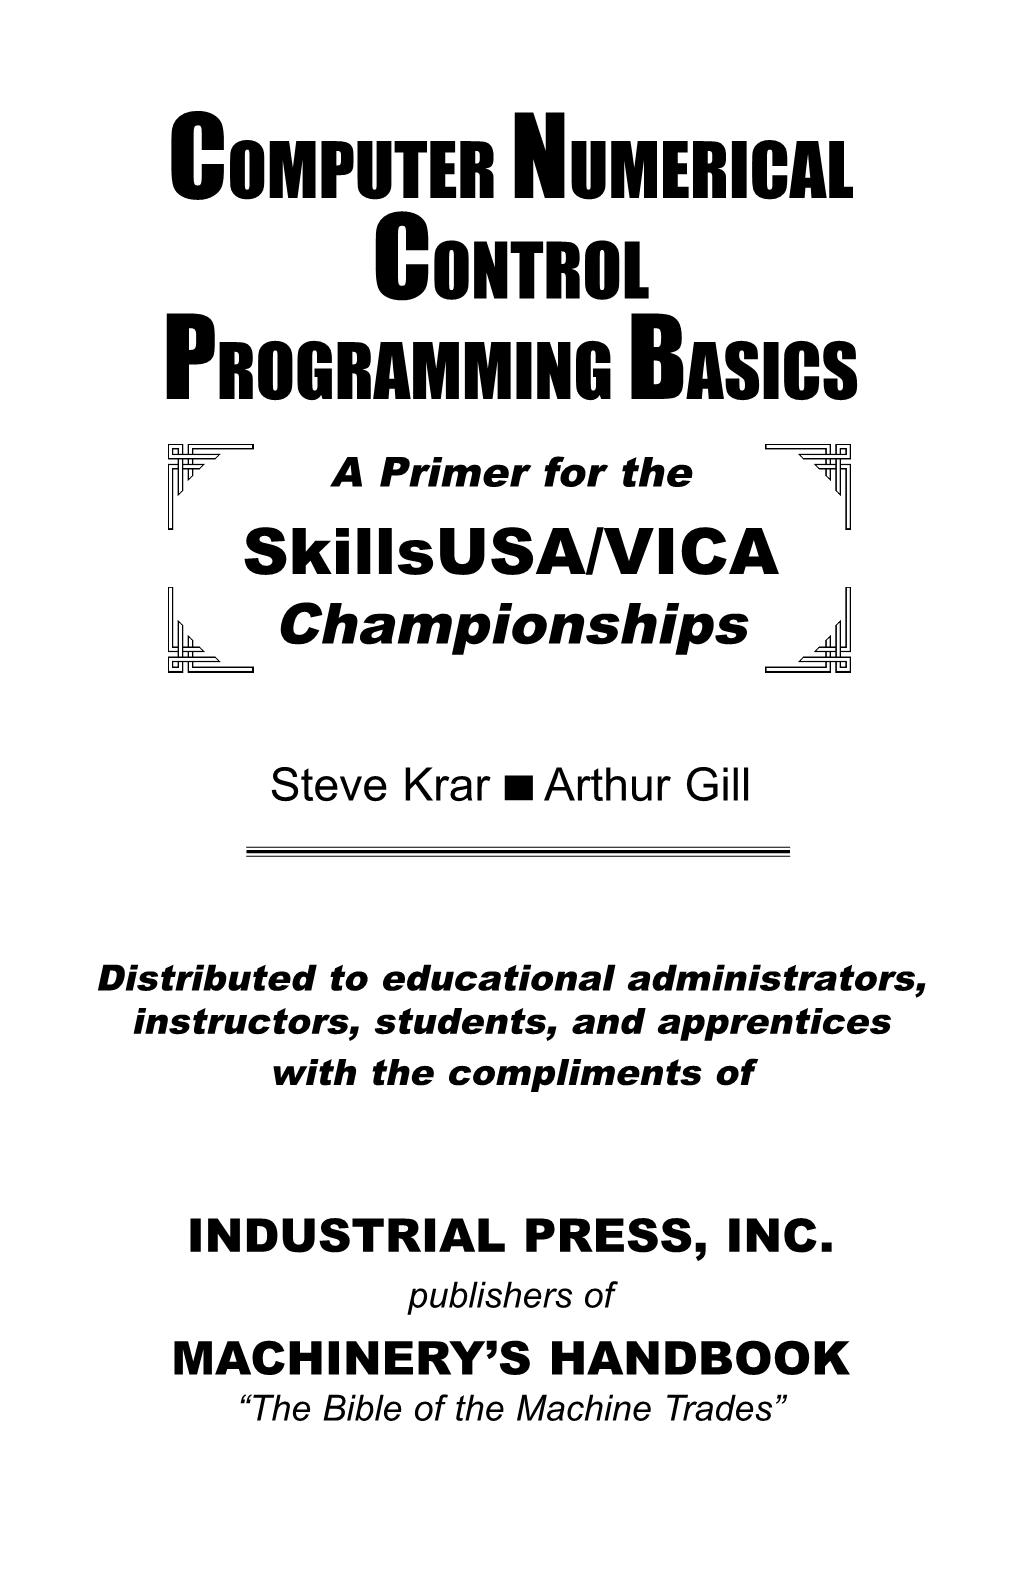 COMPUTER NUMERICAL CONTROL PROGRAMMING BASICS a Primer for the Skillsusa/VICA Championships